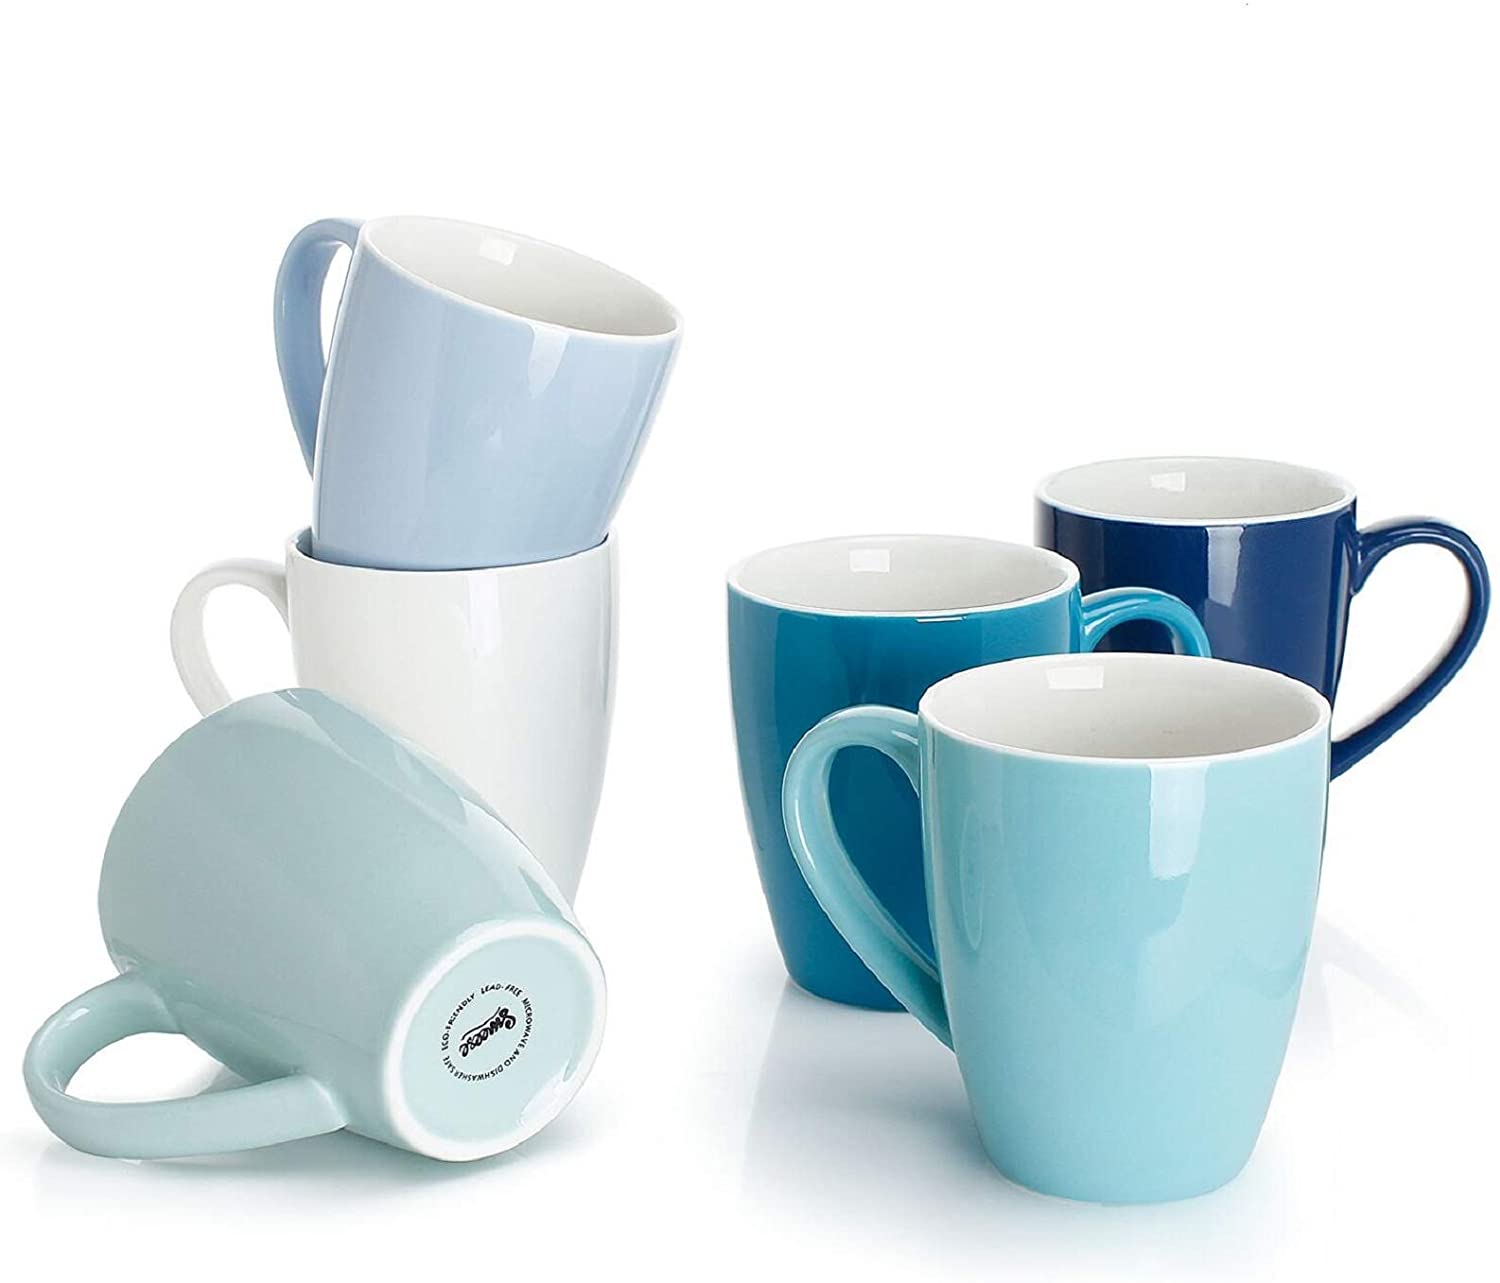 https://www.dontwasteyourmoney.com/wp-content/uploads/2021/08/sweese-16-ounce-porcelain-coffee-mug-set-6-piece-coffee-mug-sets.jpg